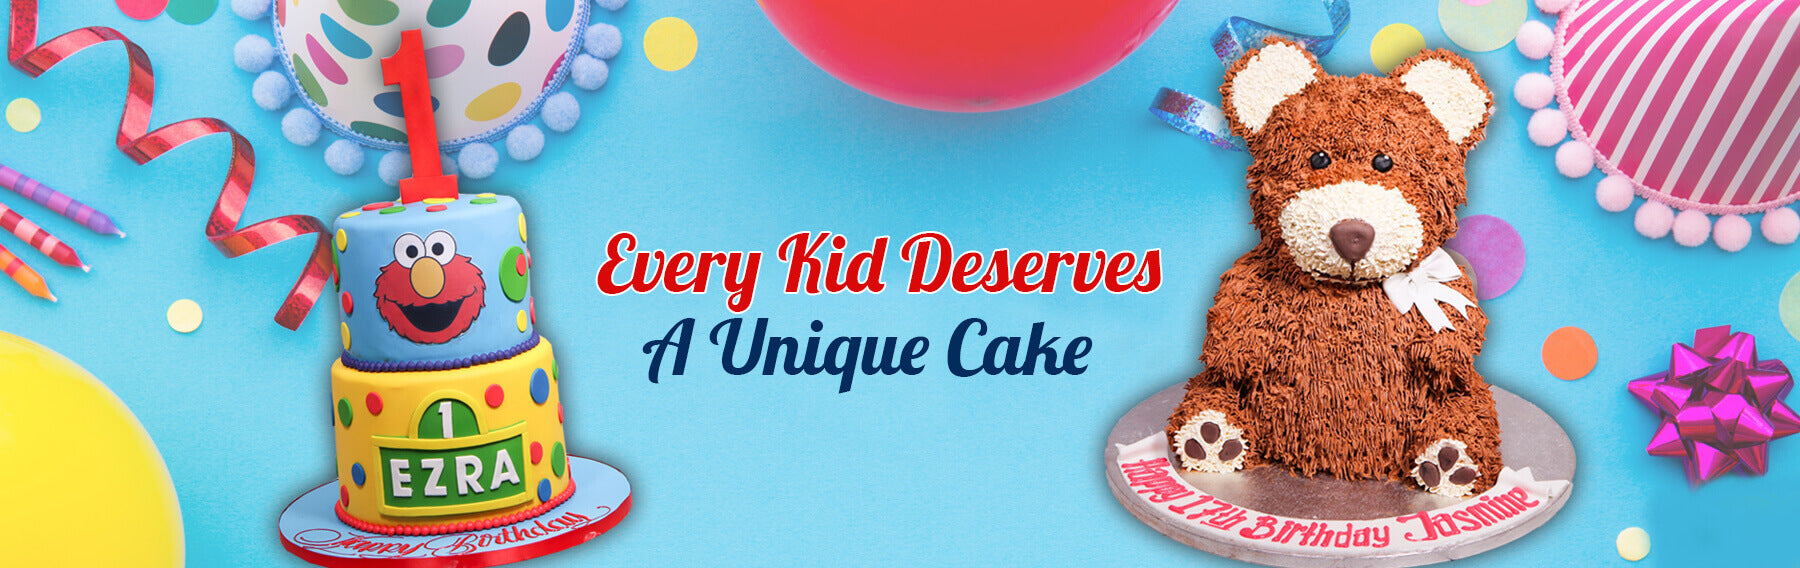 Children Cakes — Ennas' Cake Design